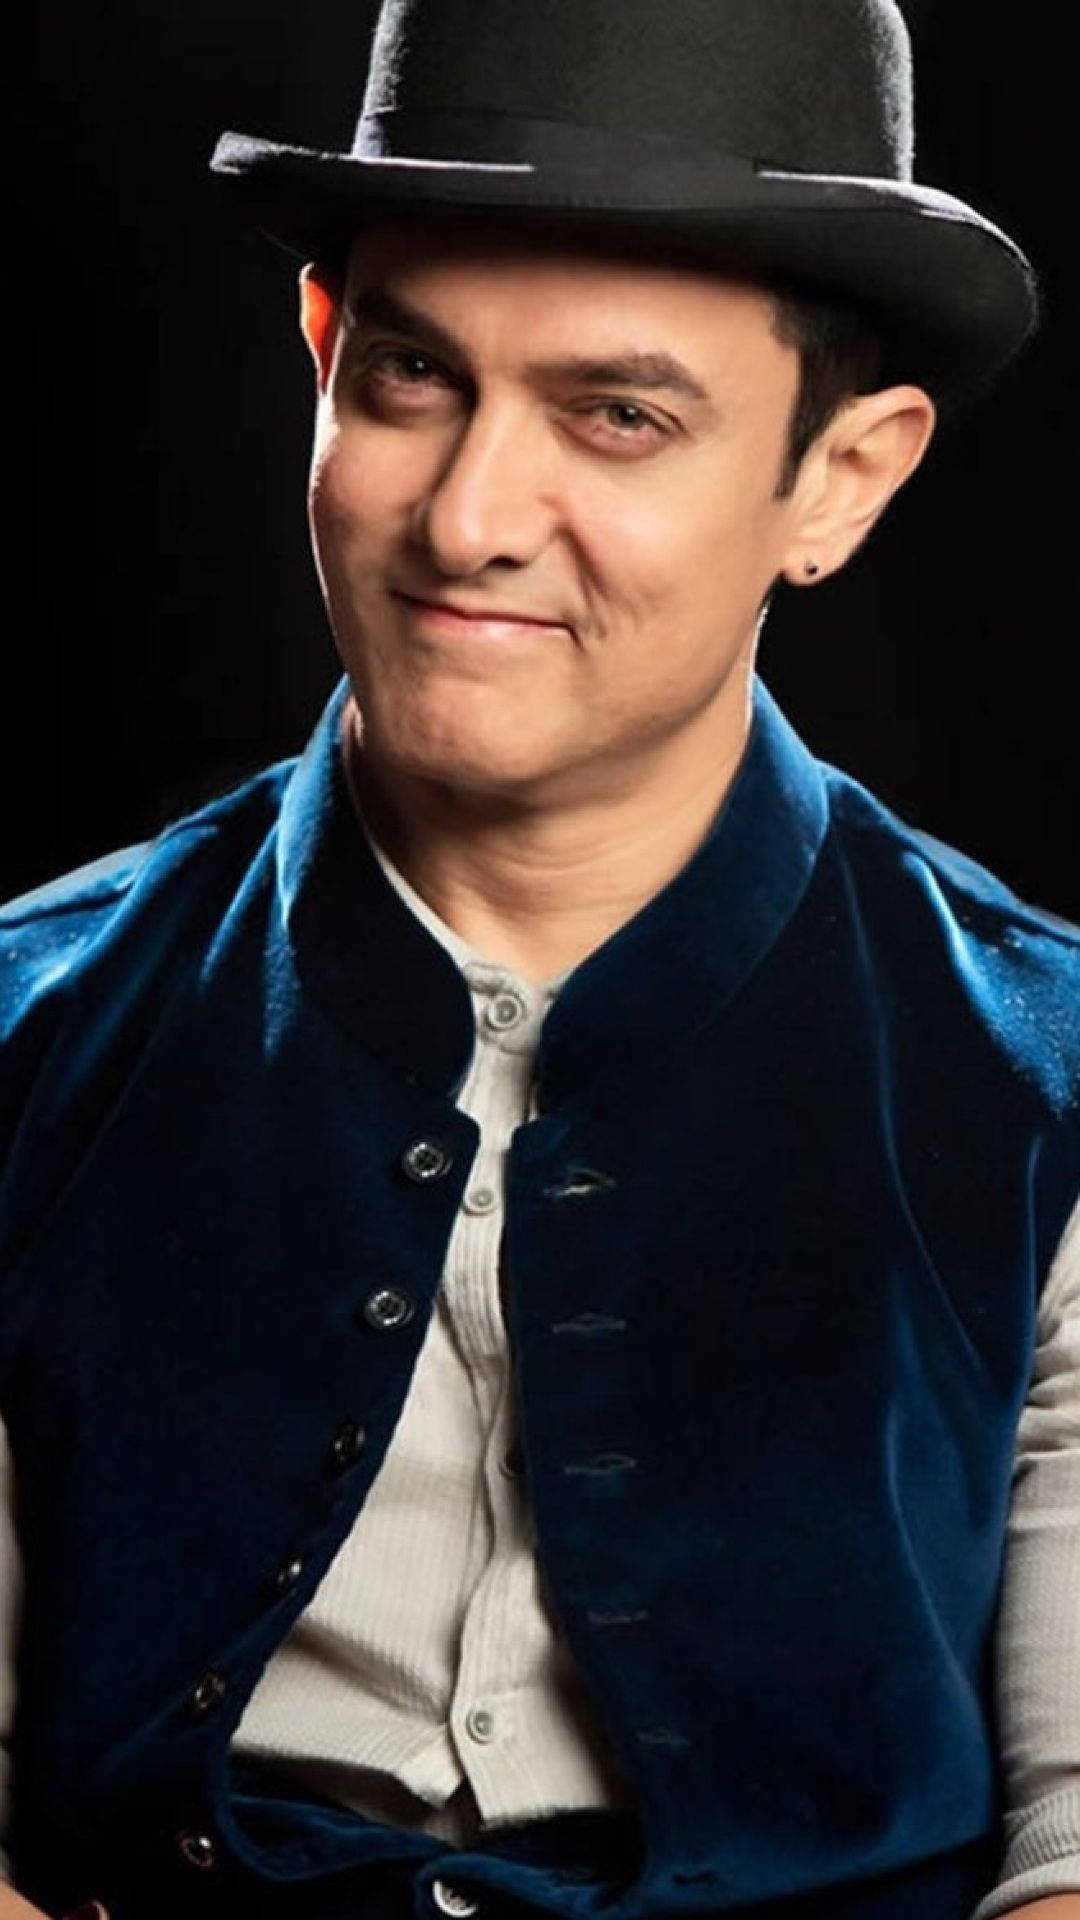 Aamir Khan Portrait Image Background